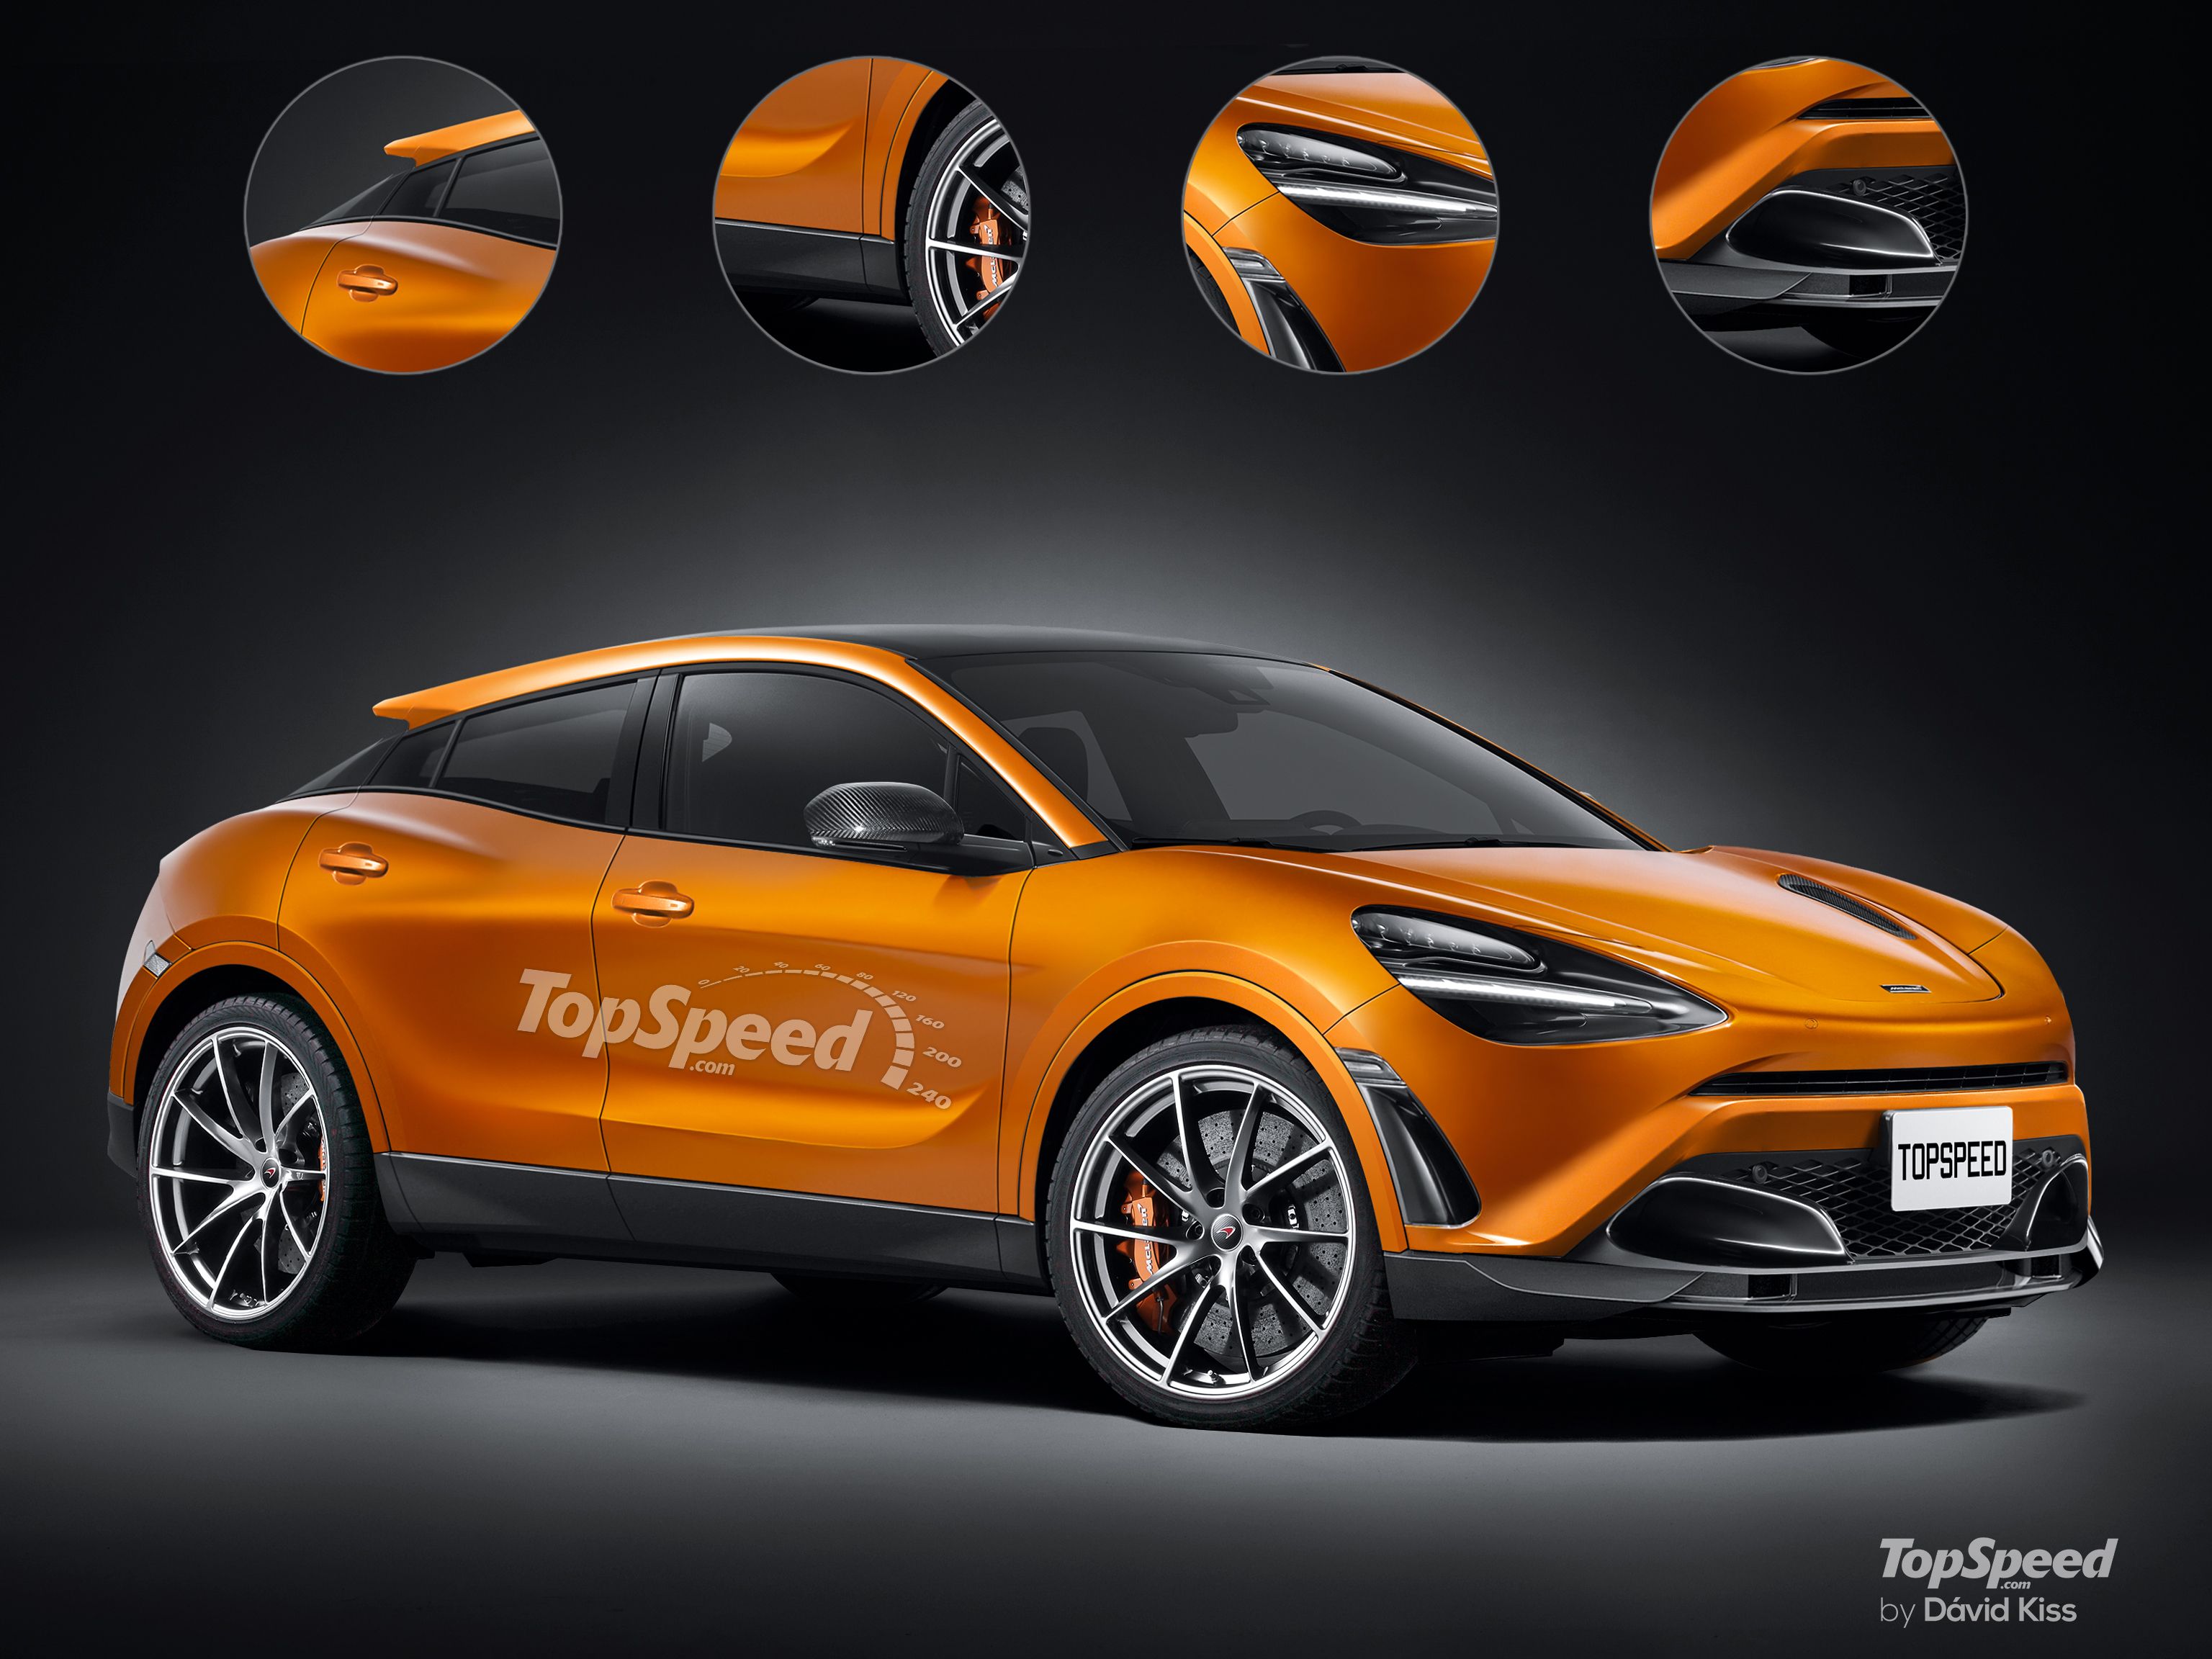 2020 - 2022 Want a McLaren SUV? Better Keep Wishing Bucko